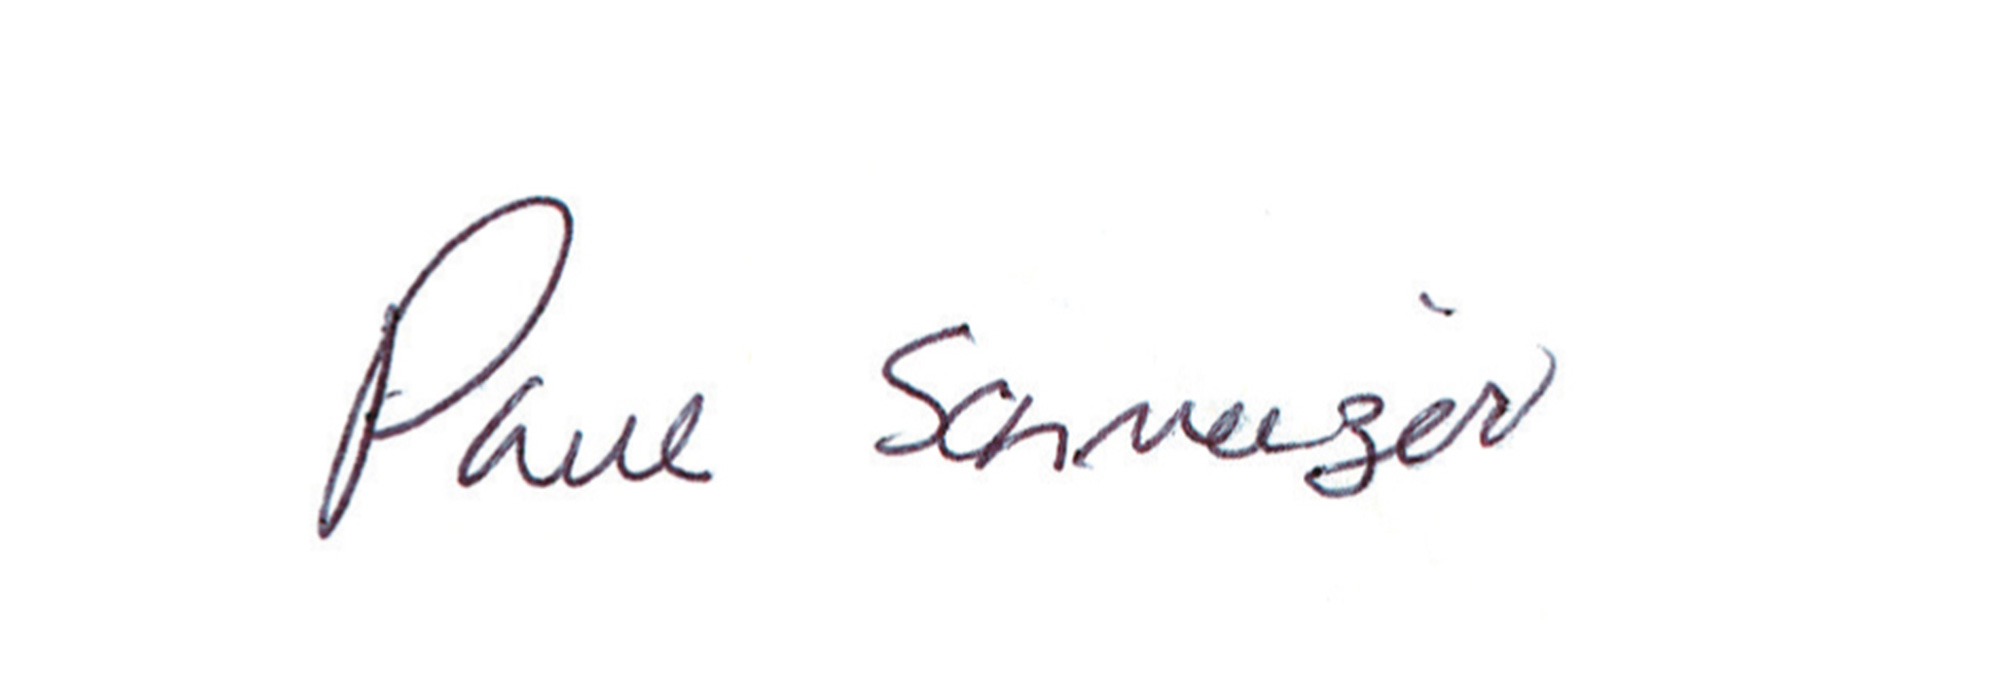 A photograph of Winona LaDuke's written version of the name Paul Schmelzer.